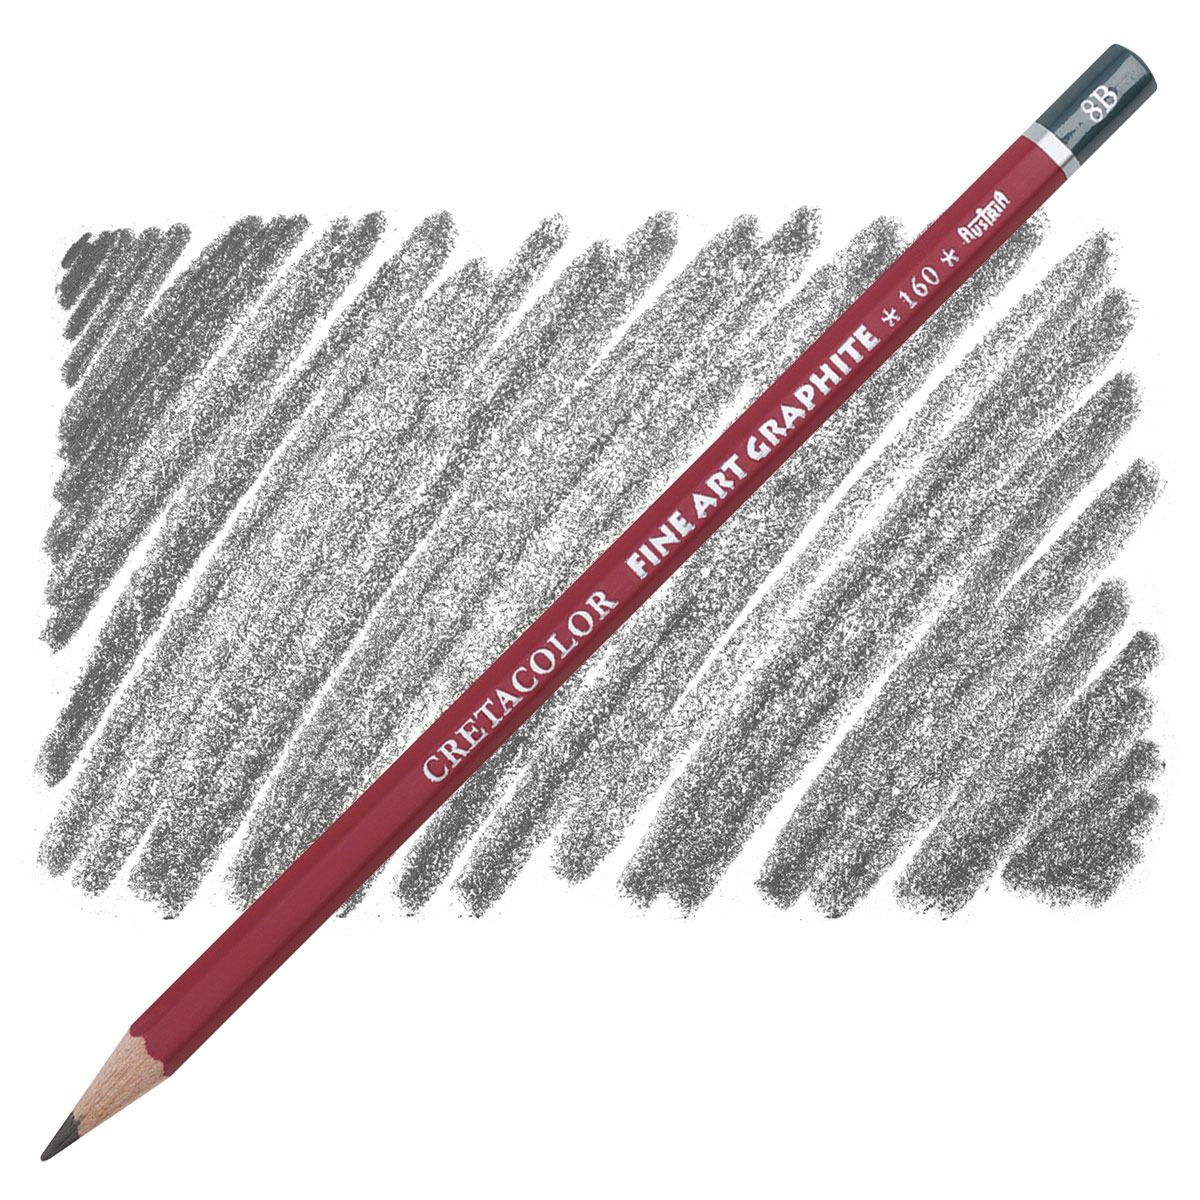 Cretacolor Fine Art Graphite Pencil - HB